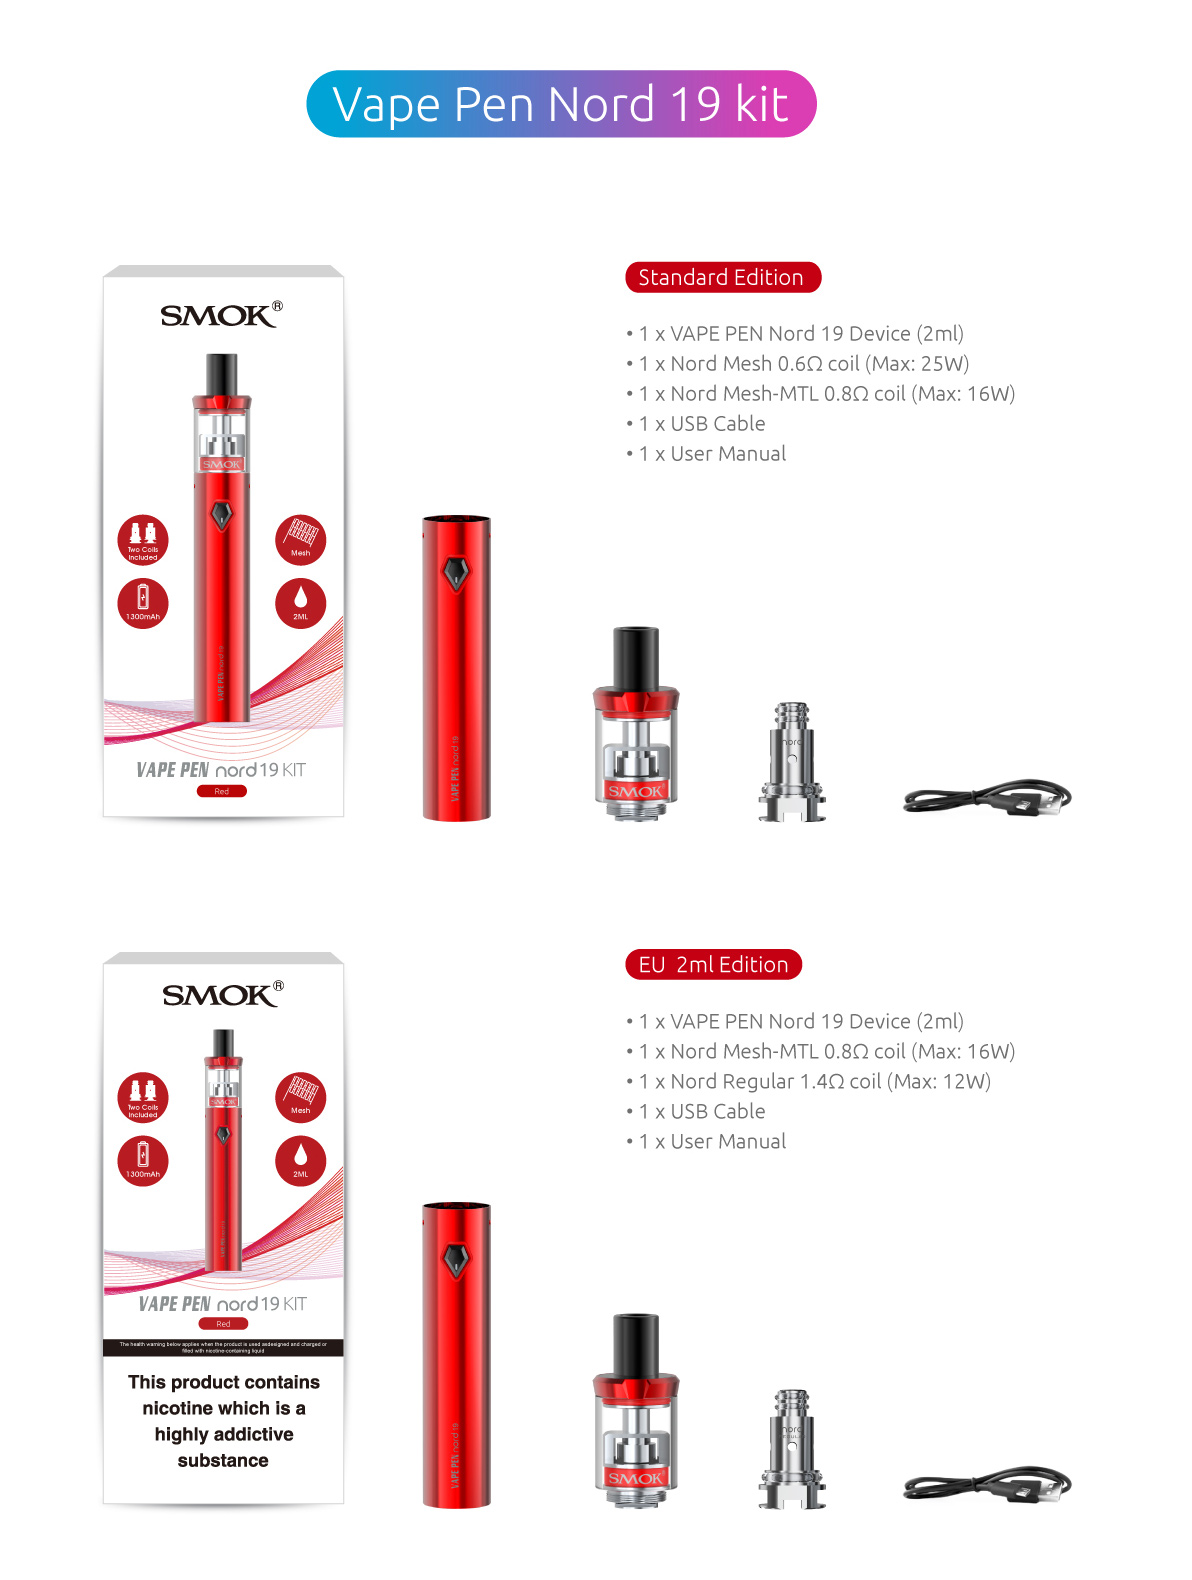 The Kit Includes - SMOK Vape Pen Nord 19 Mod